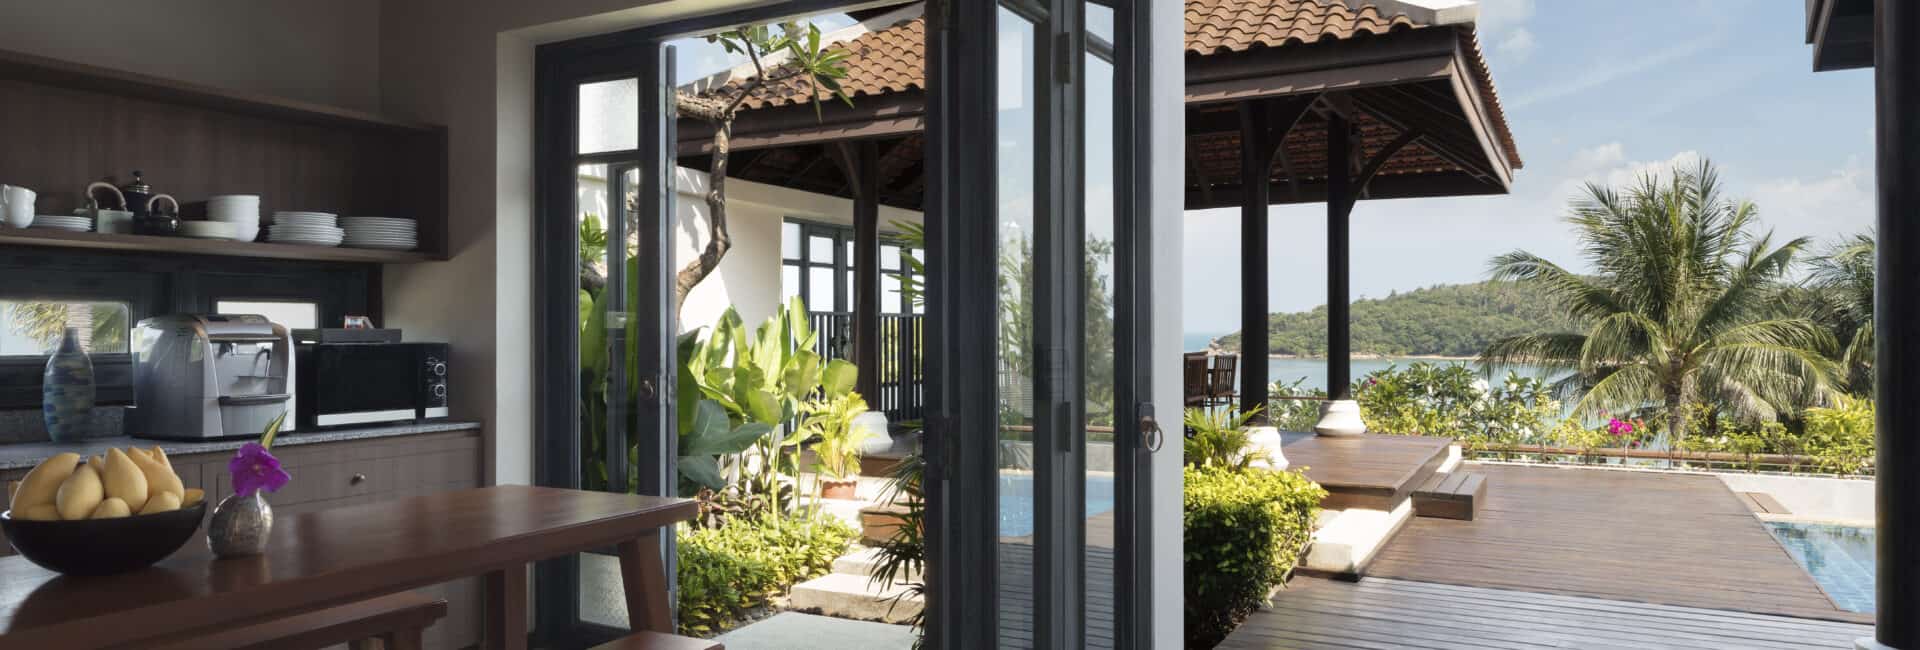 Anantara Lawana Koh Samui Resort - Two Bedroom Lawana Sea View Pool Villa